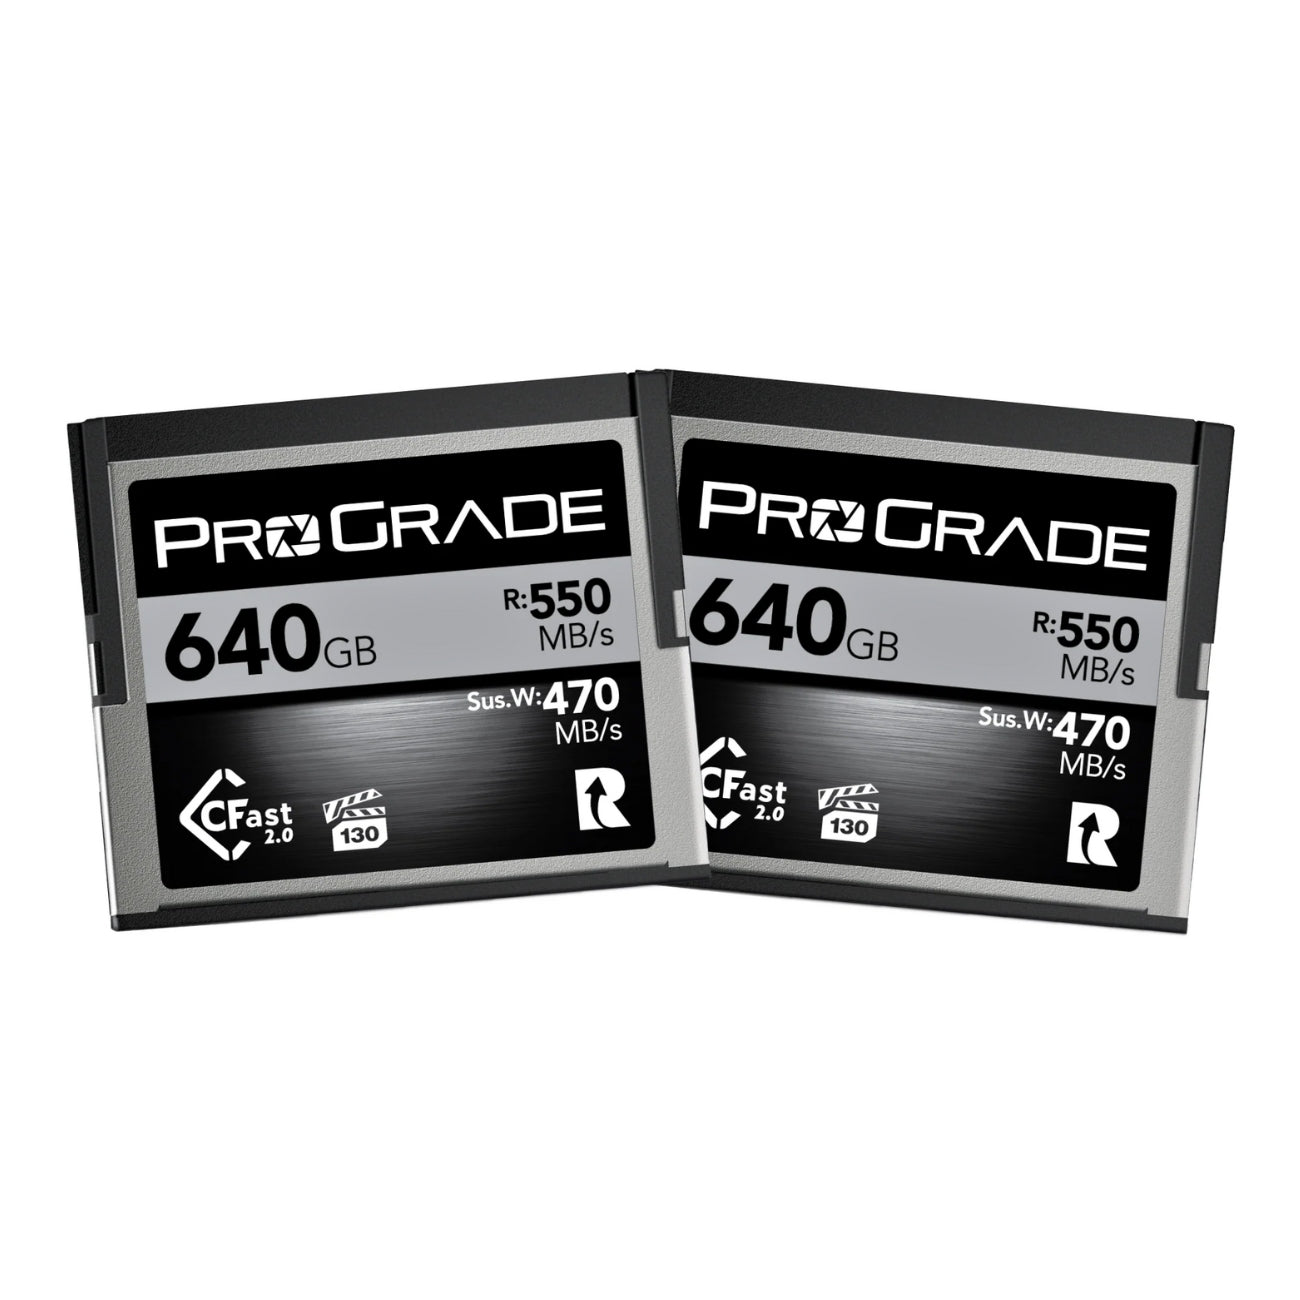 ProGrade Digital 640GB CFast 2.0 Cobalt Memory Card (2-Pack) - c fast 2.0 memory card / memory card shop